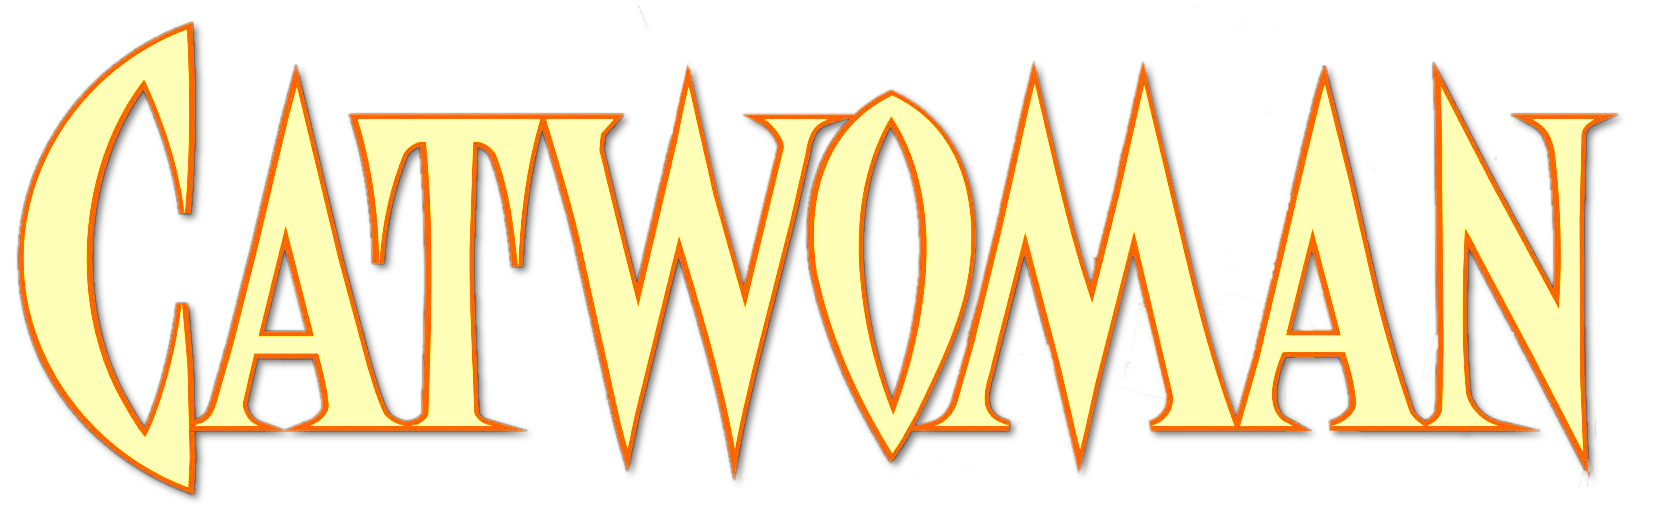 Catwoman Logo - Image - Catwoman logo.png | LOGO Comics Wiki | FANDOM powered by Wikia